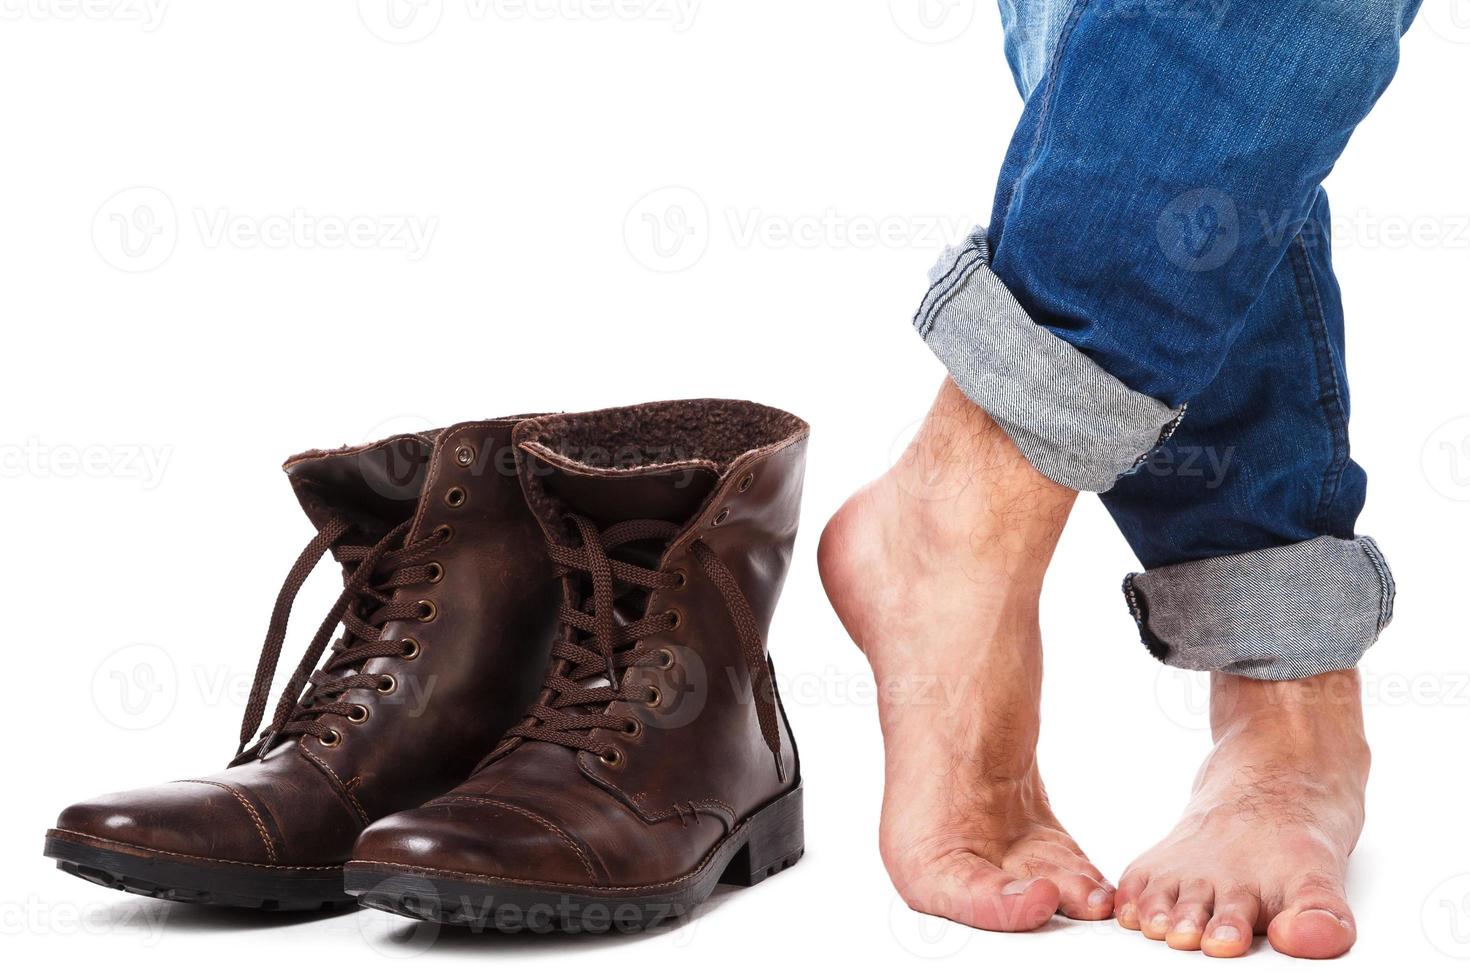 pernas masculinas e botas de couro foto